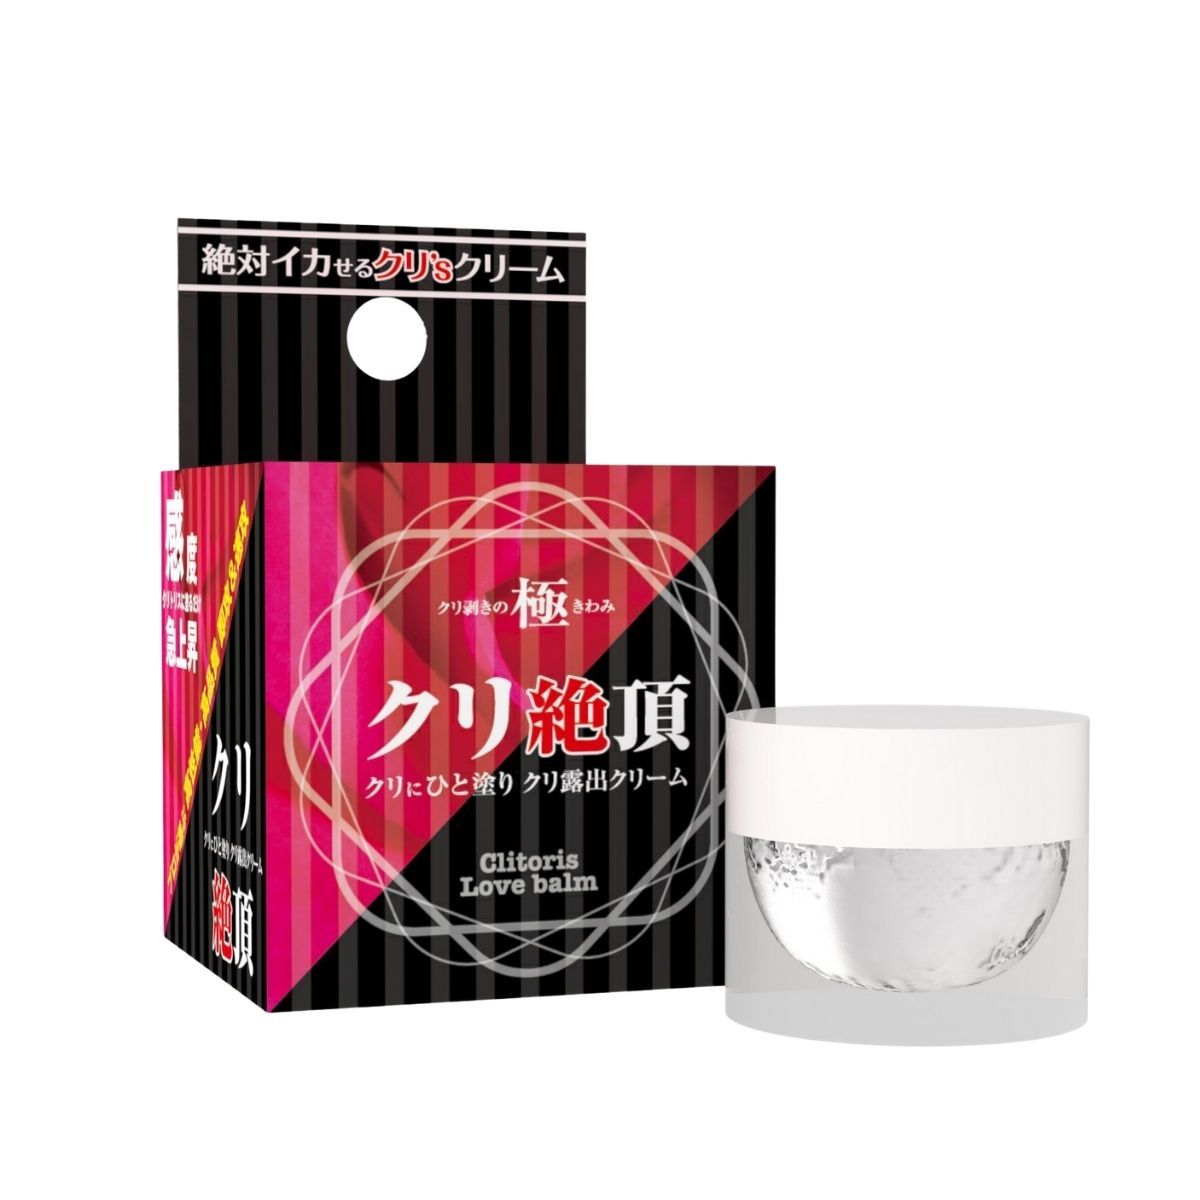 SSI JAPAN 陰蒂絶頂 陰蒂快感の極 陰蒂刺激乳霜 5 克 高潮興奮液 購買